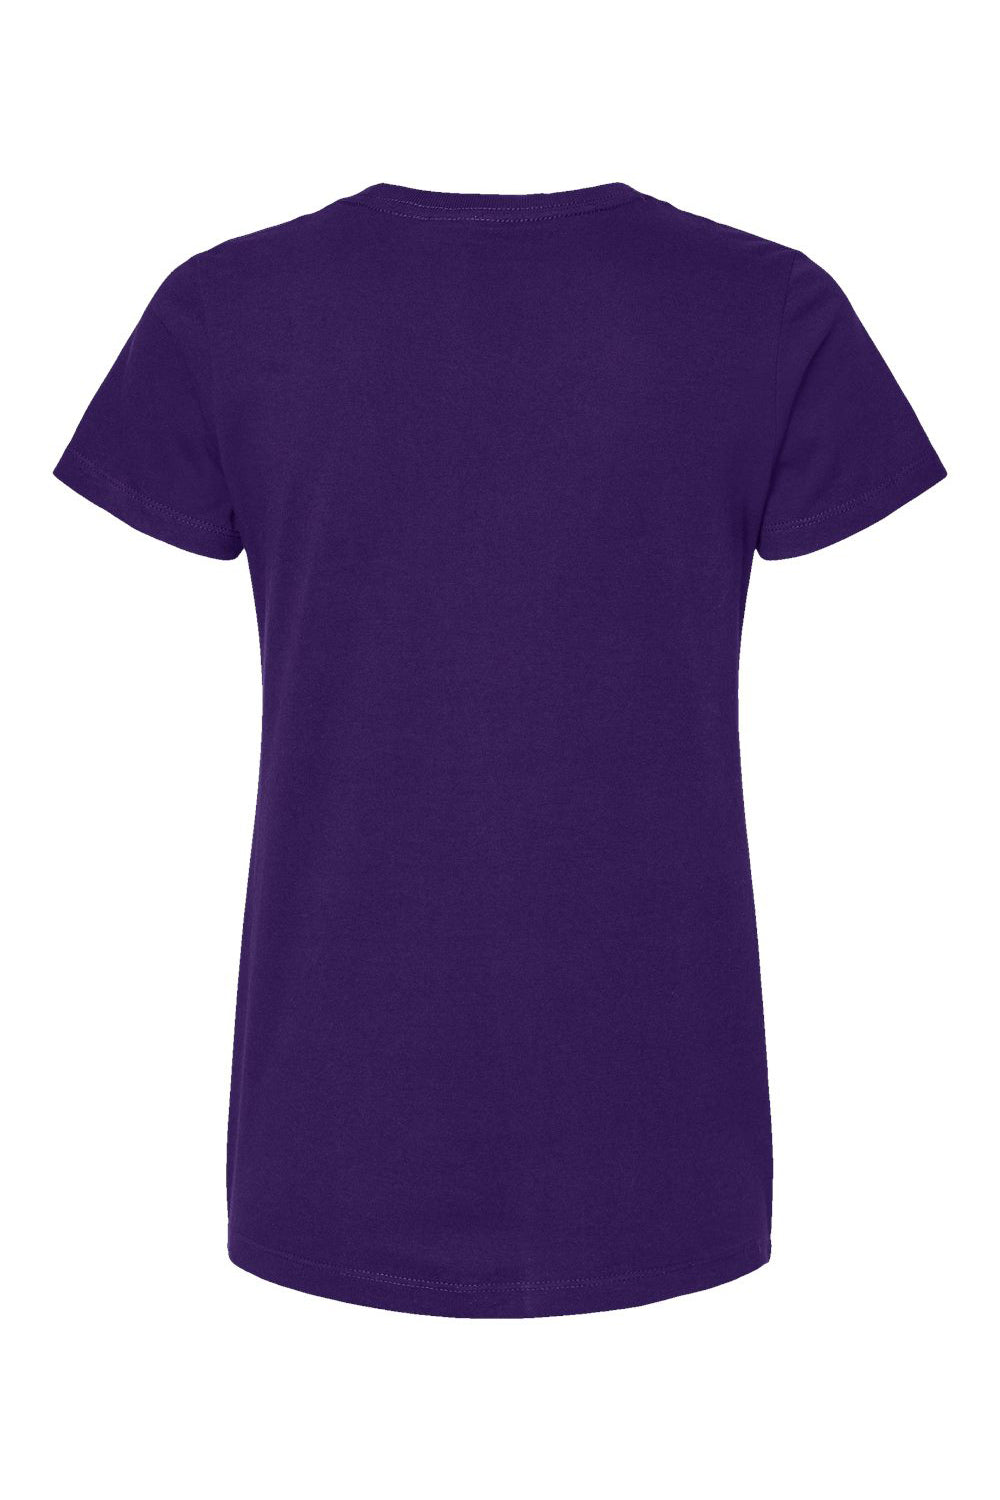 M&O 4810 Womens Gold Soft Touch Short Sleeve Crewneck T-Shirt Purple Flat Back